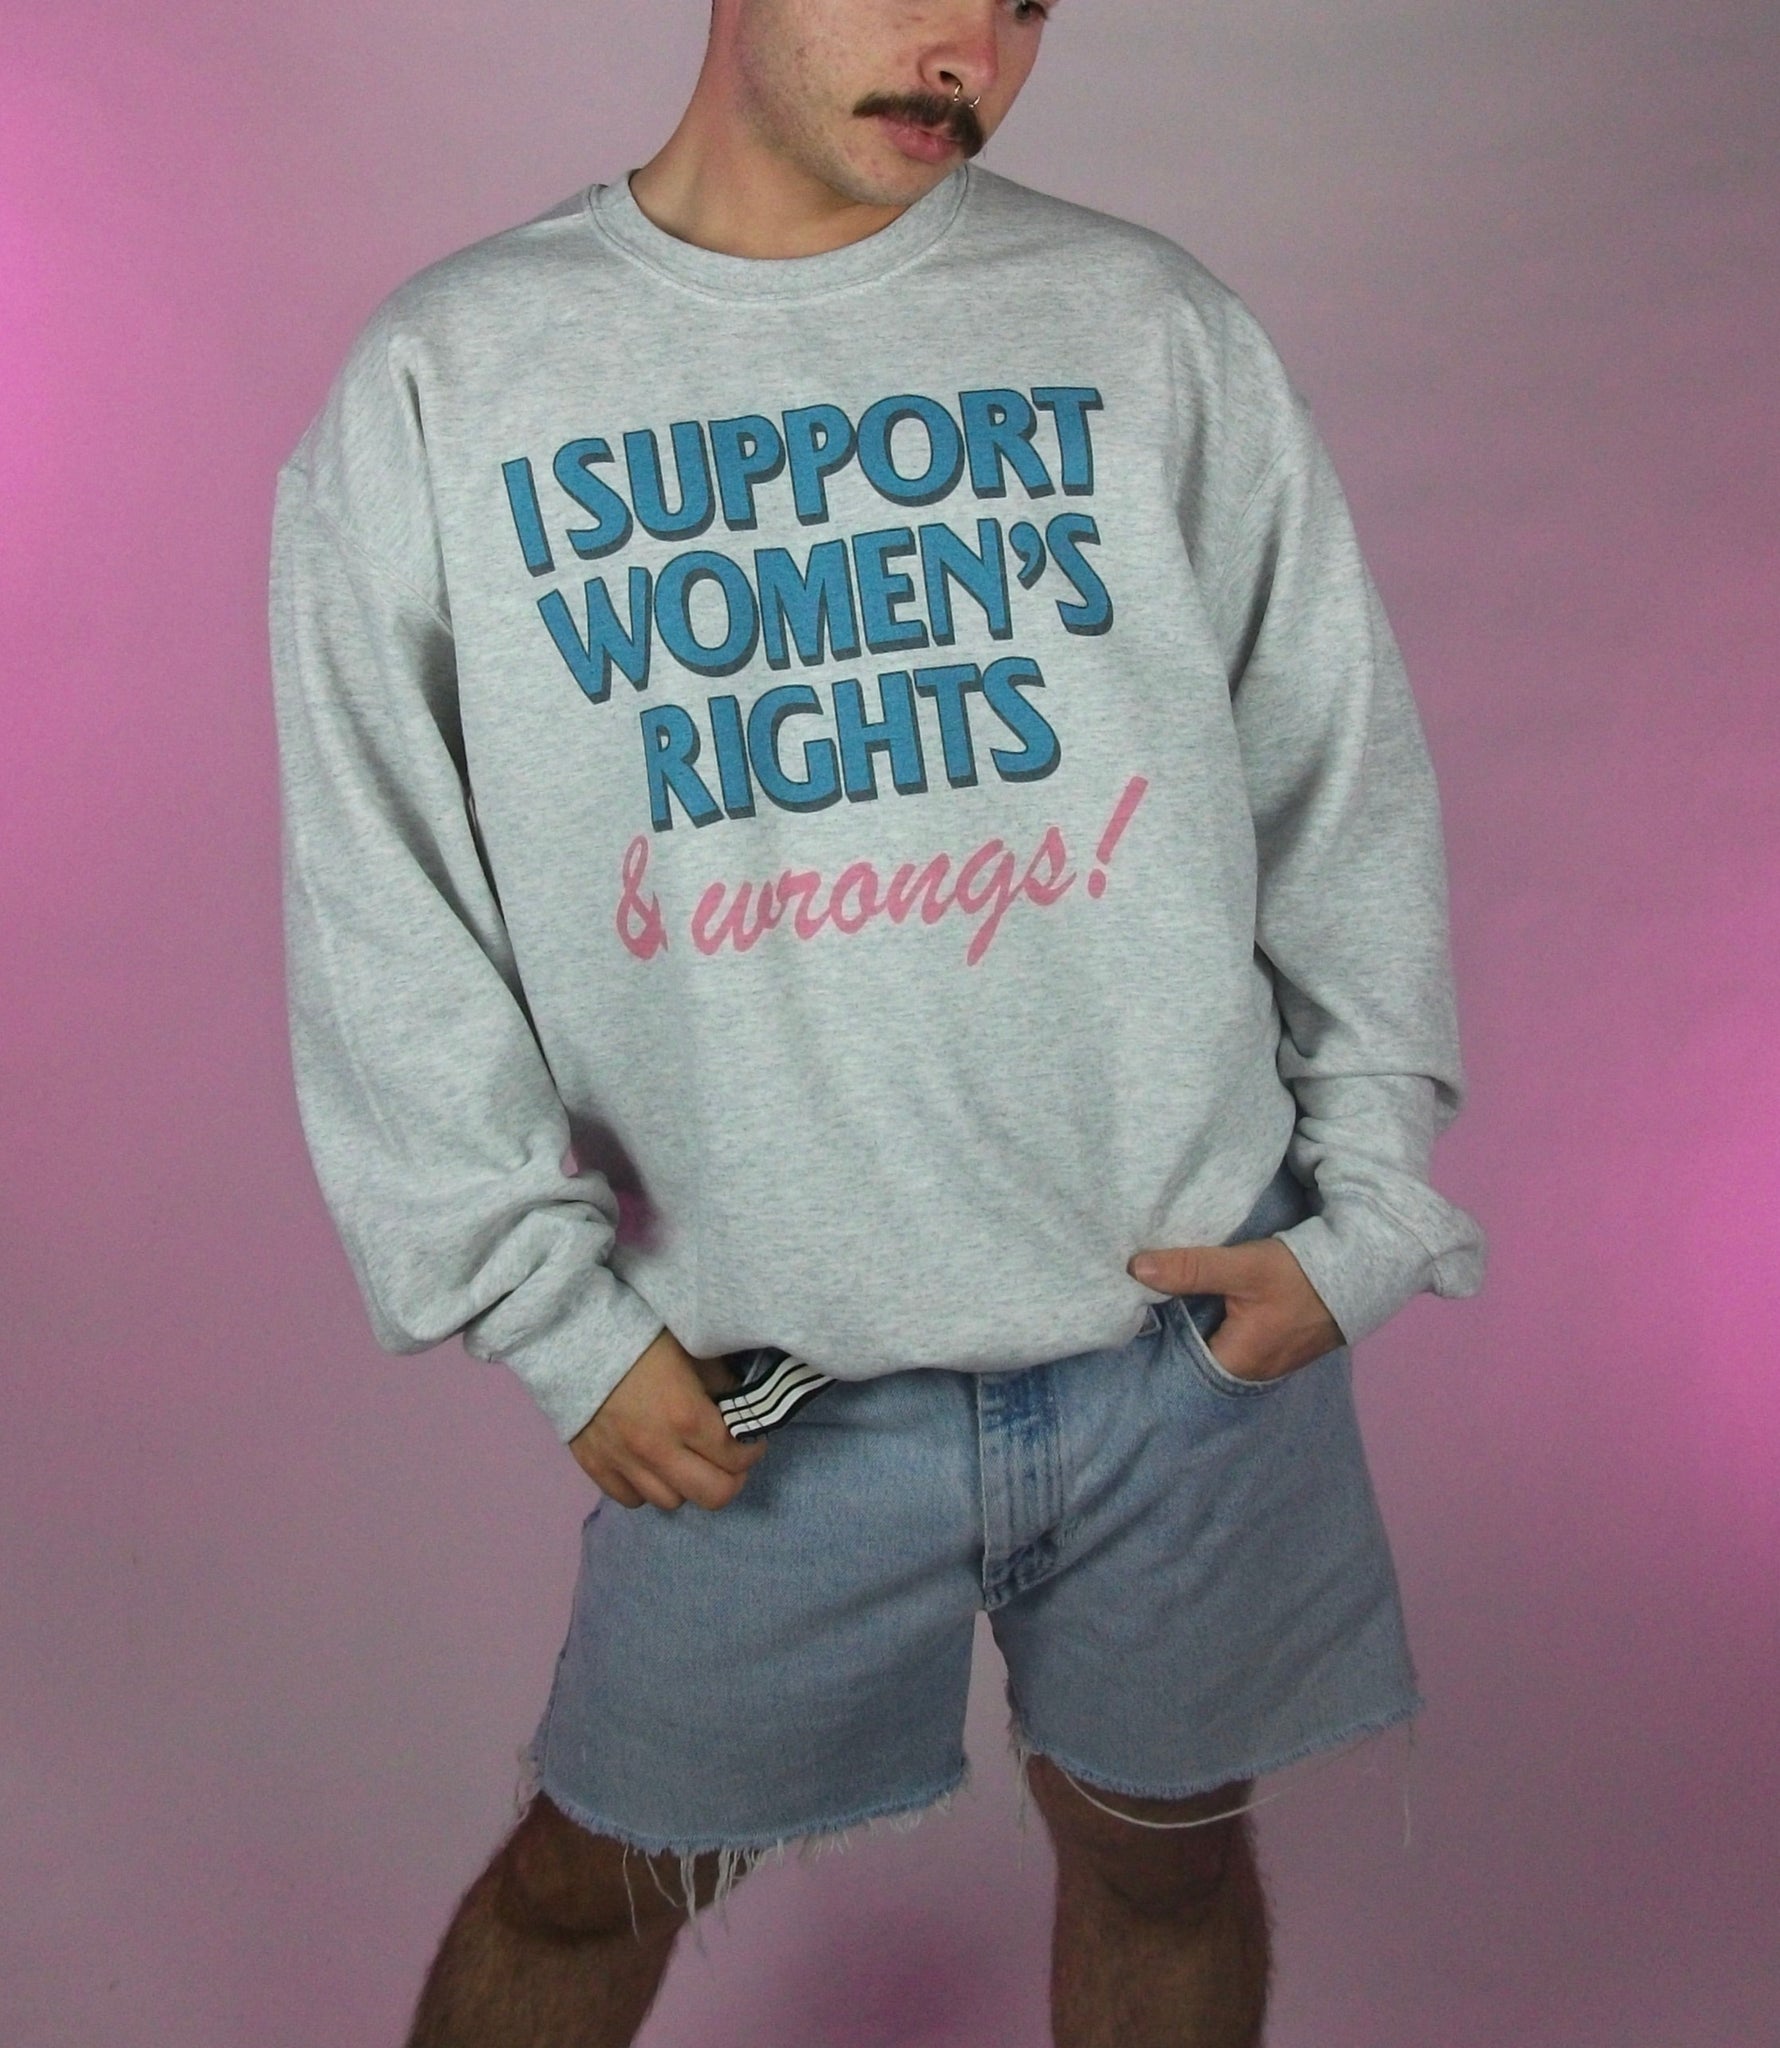 I Support Women's Rights & Wrongs Crewneck Sweatshirt